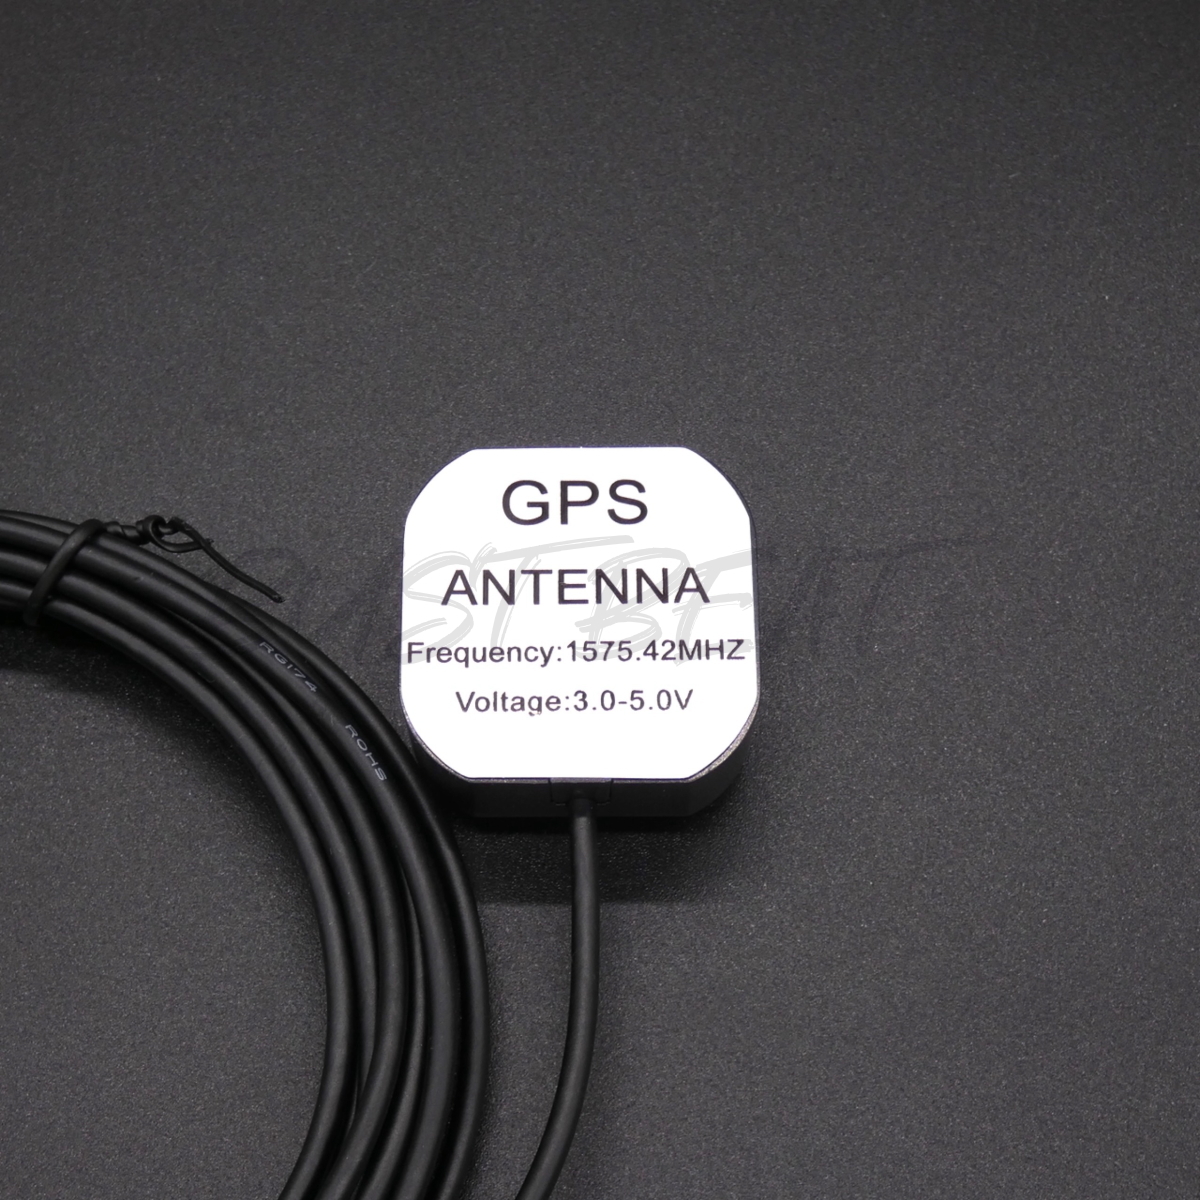 BUST BEAT Panasonic Gorilla CN-G1100VD соответствует GPS antenna earth plate MCX 1m